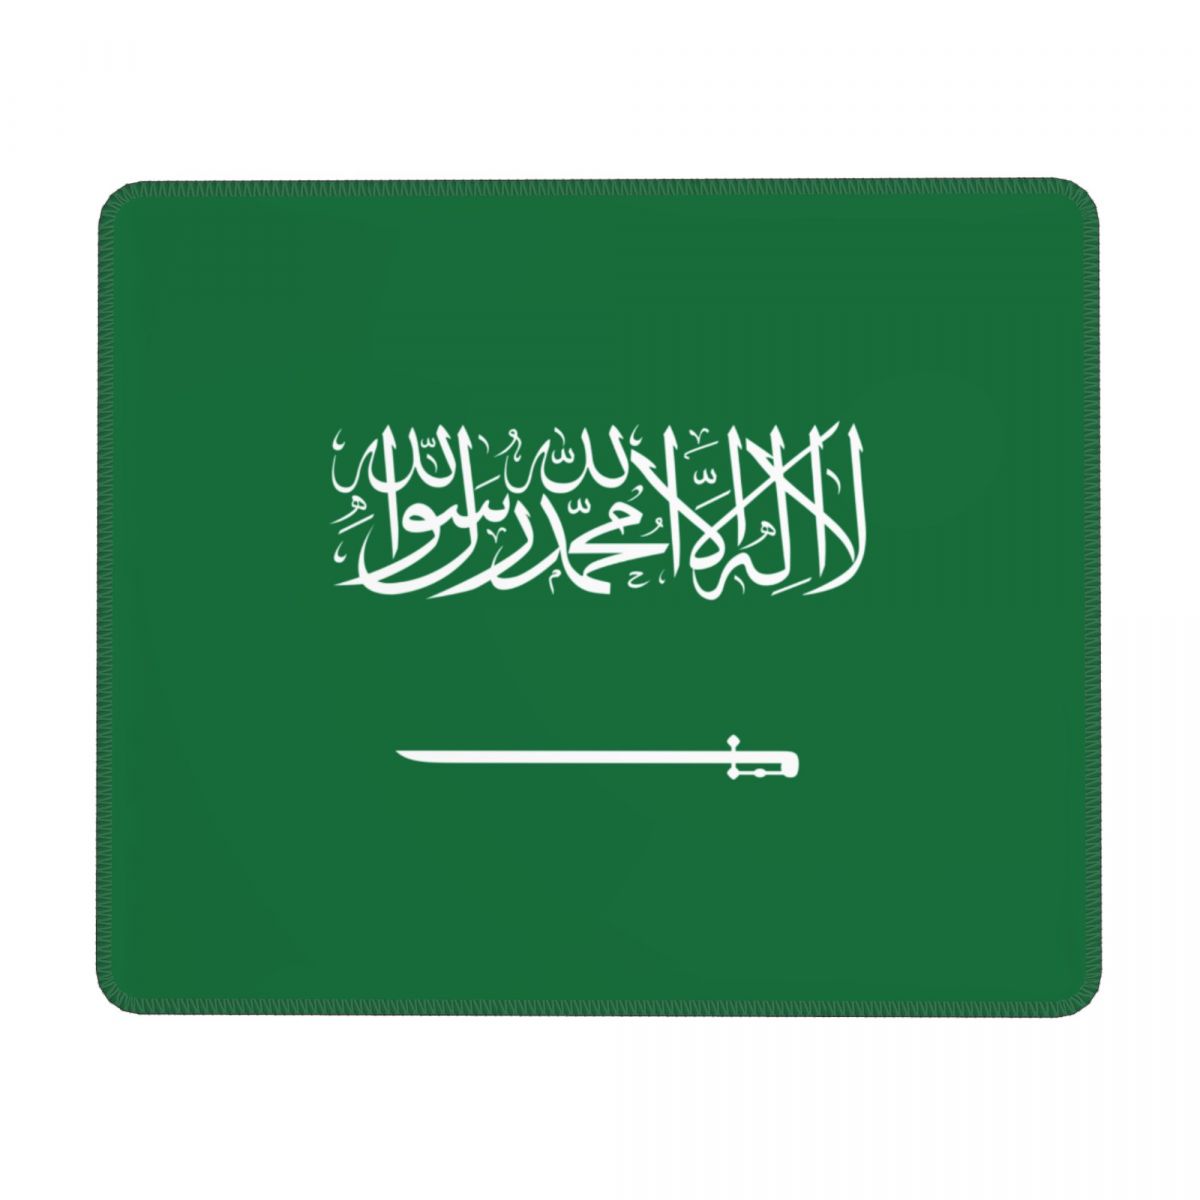 Saudi Arabia Flag Square Mouse Pad for Wireless Mouse